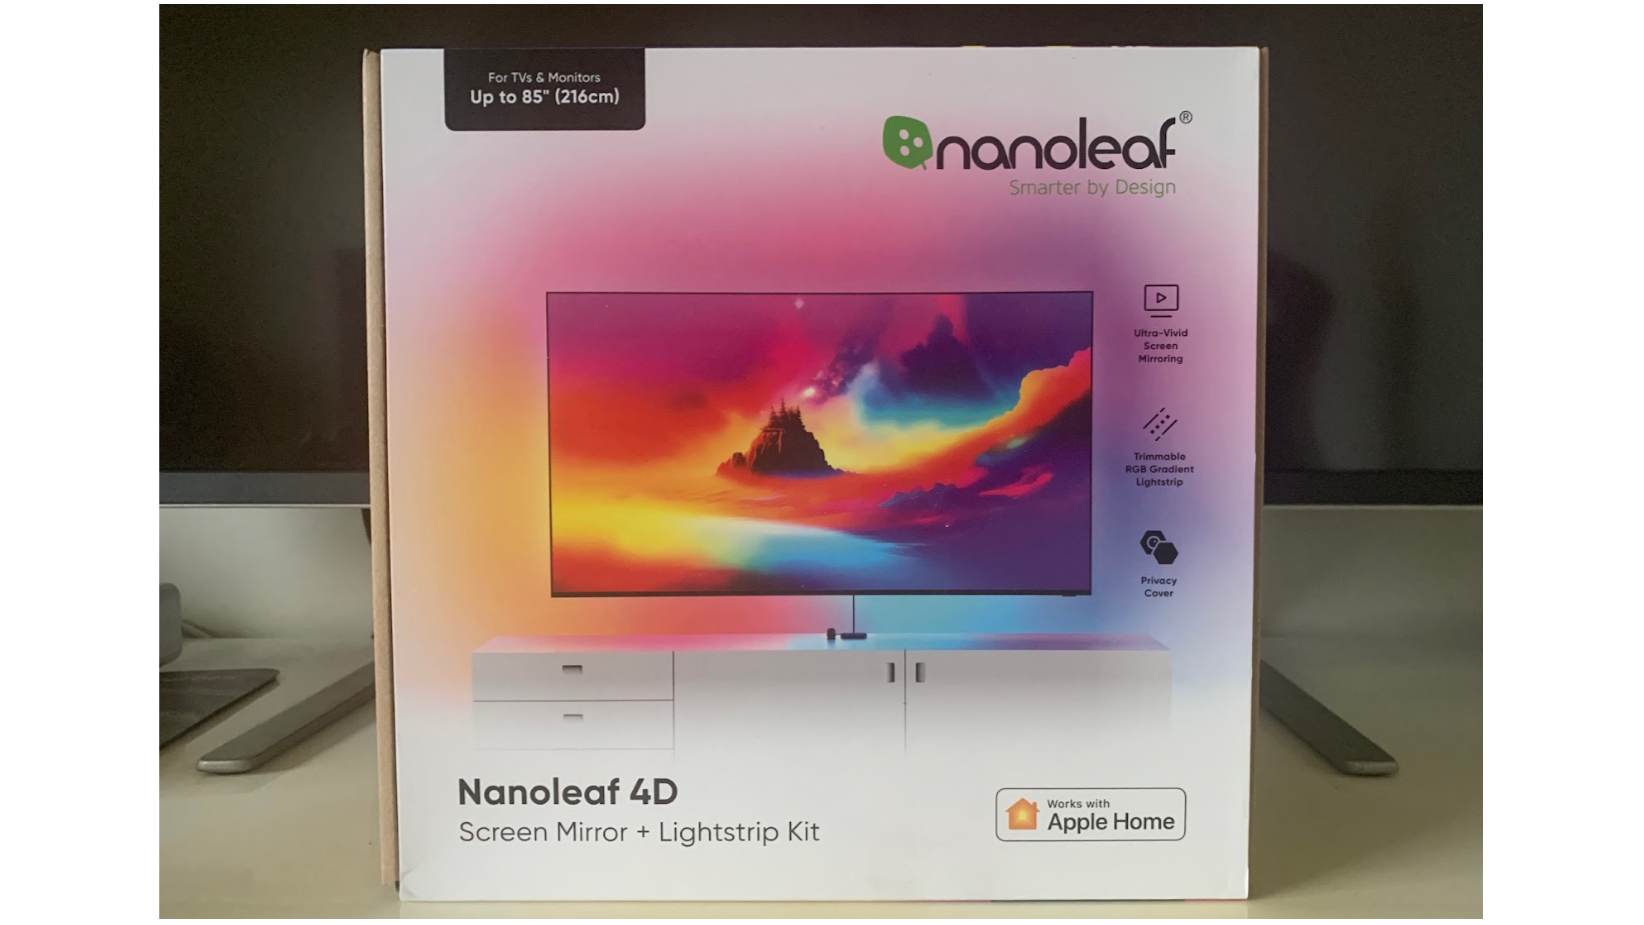 The Nanoleaf 4D in its box